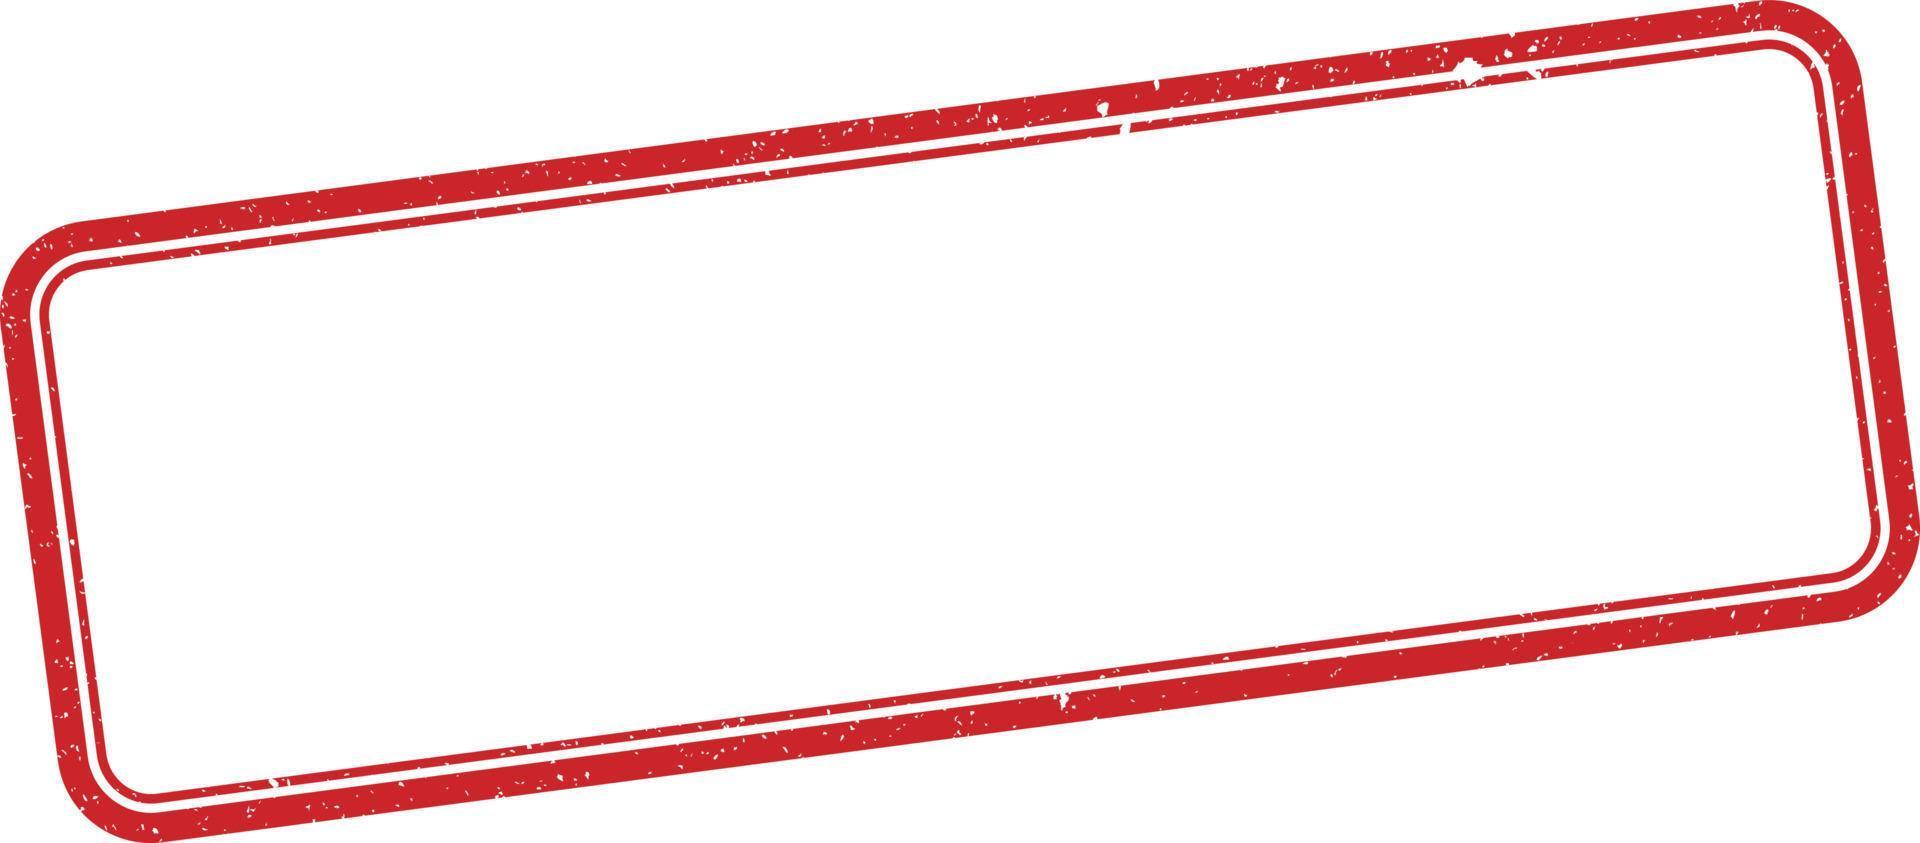 marco de sello rojo vector